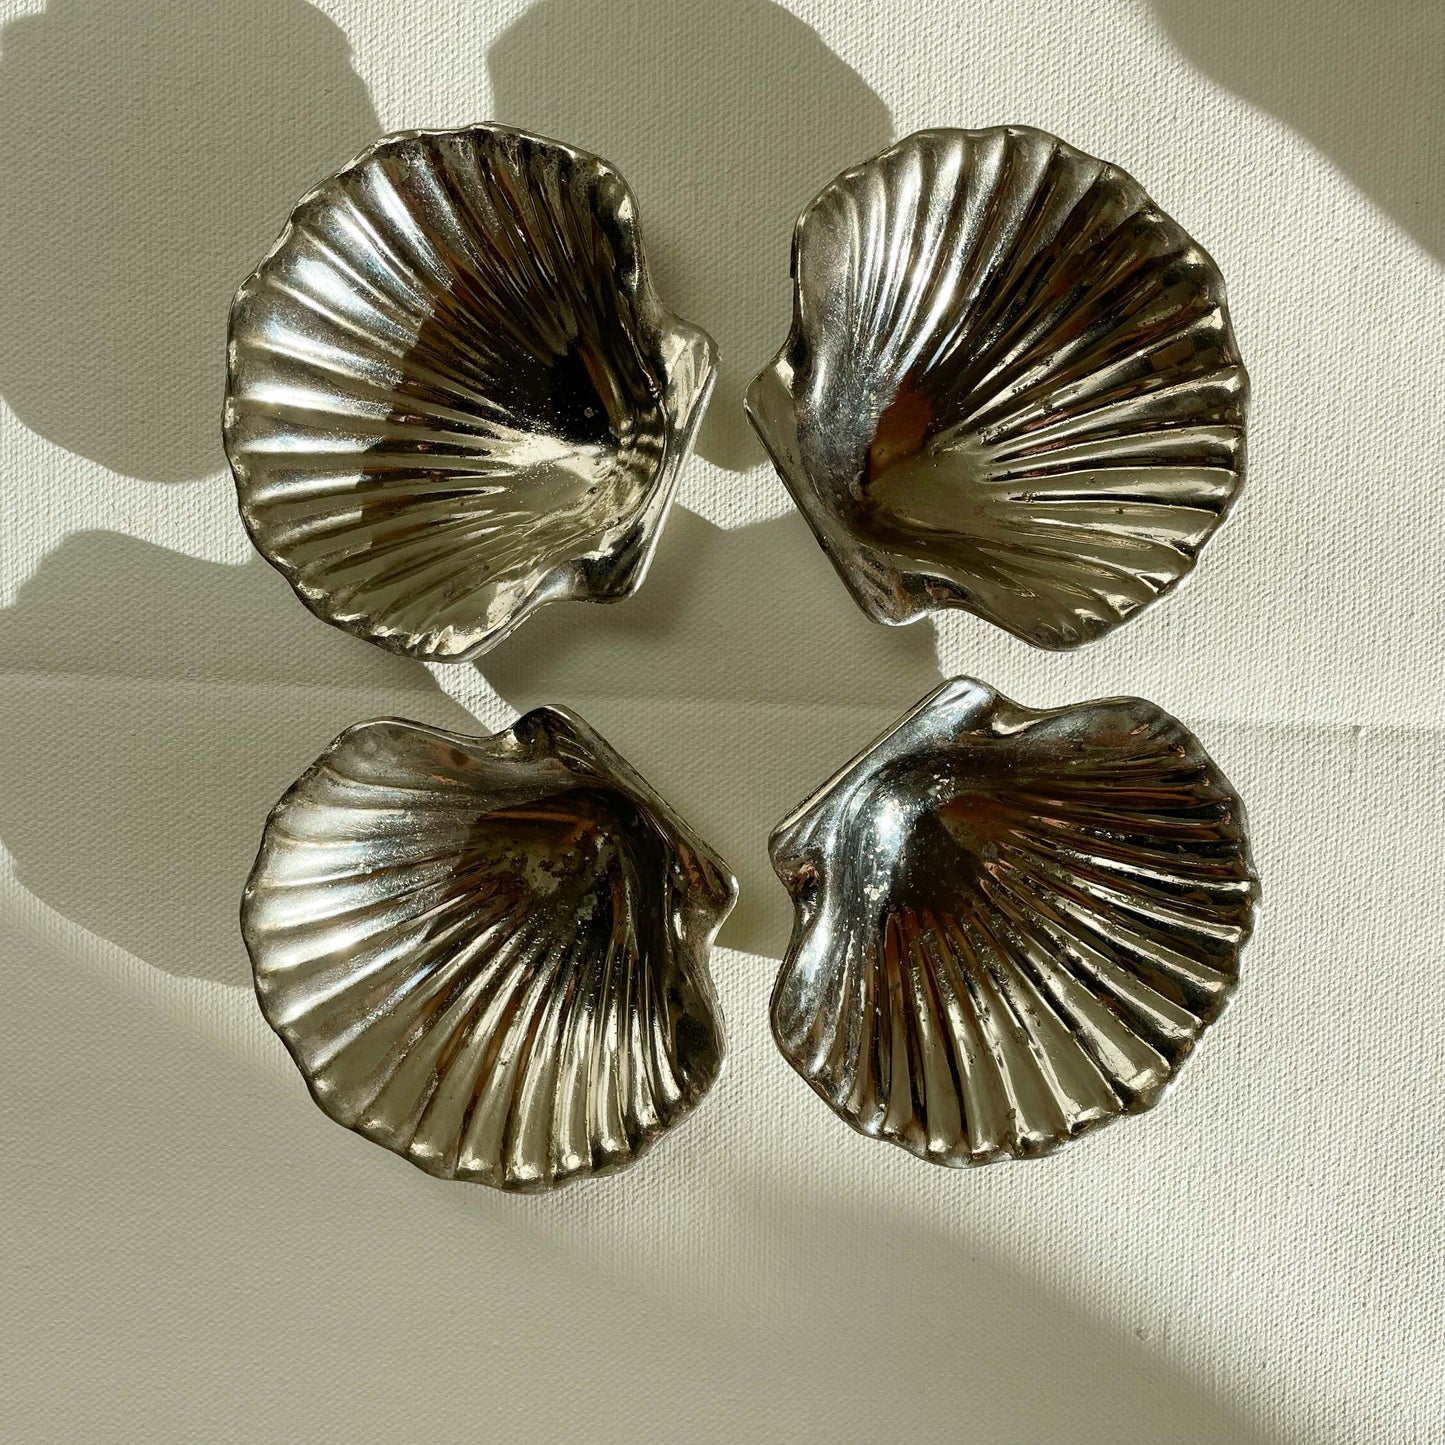 Set of 4 Miniature Scallop Shell Plate